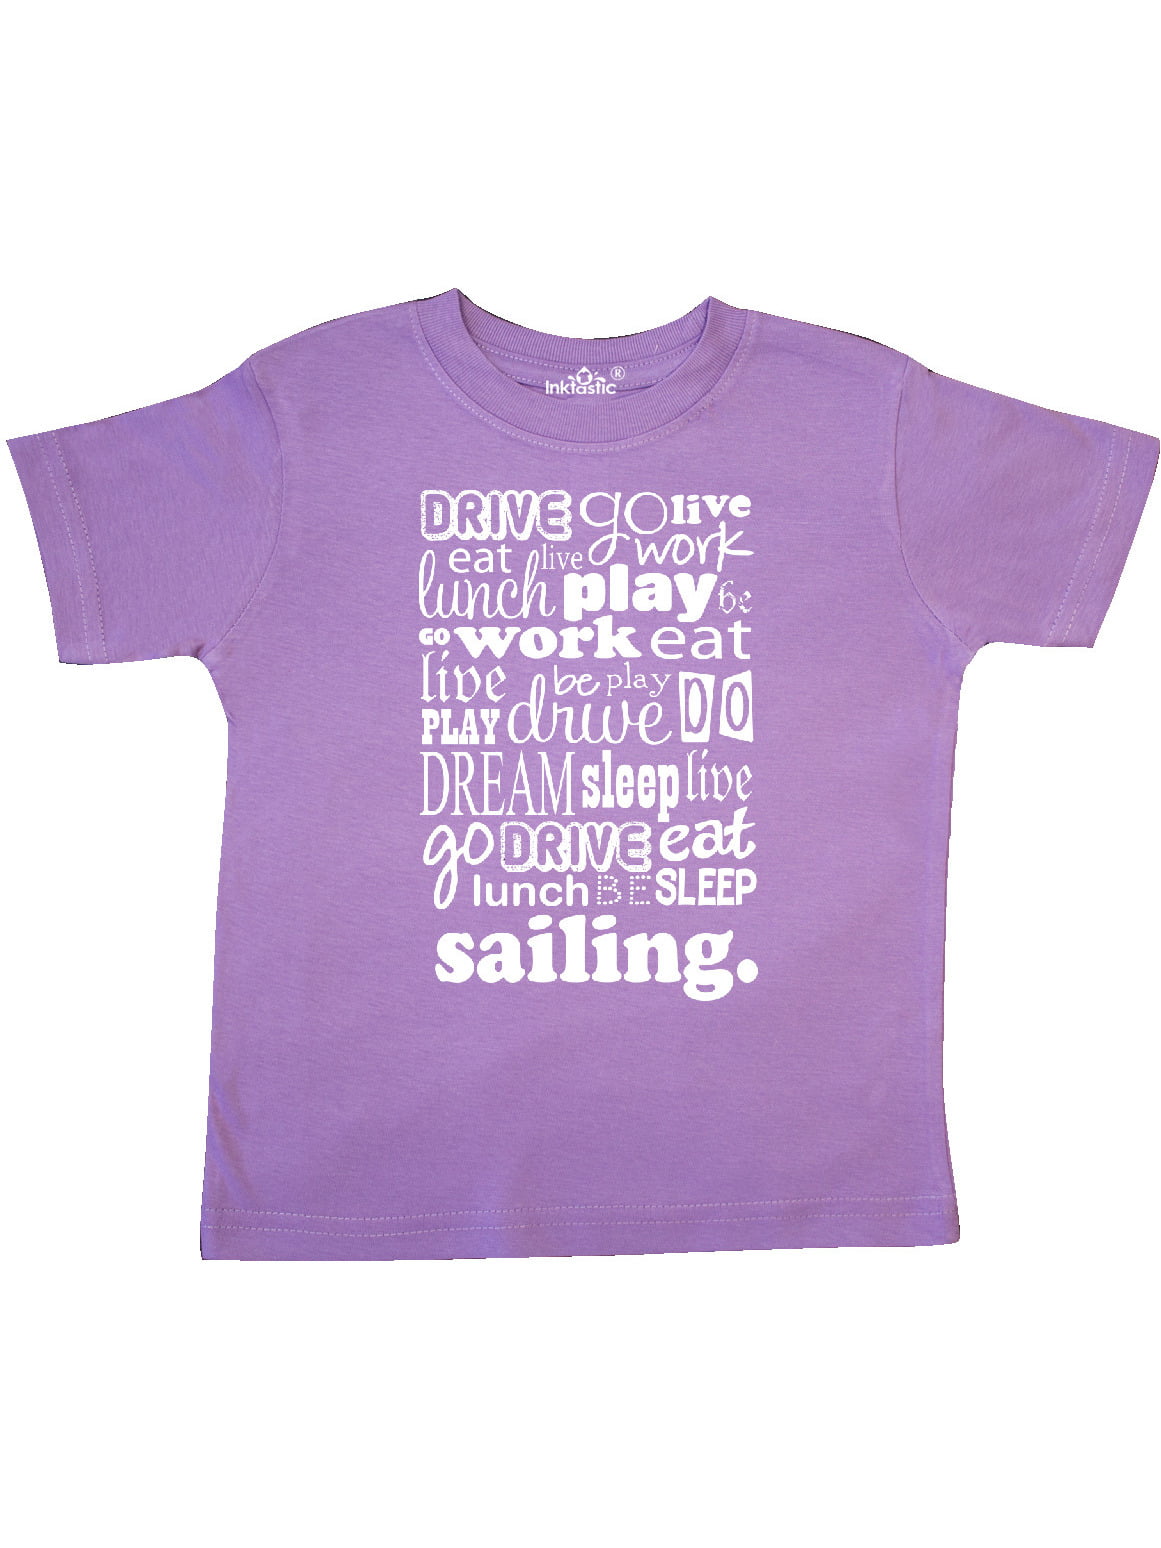 inktastic Sailboat Boating Purple Toddler T-Shirt